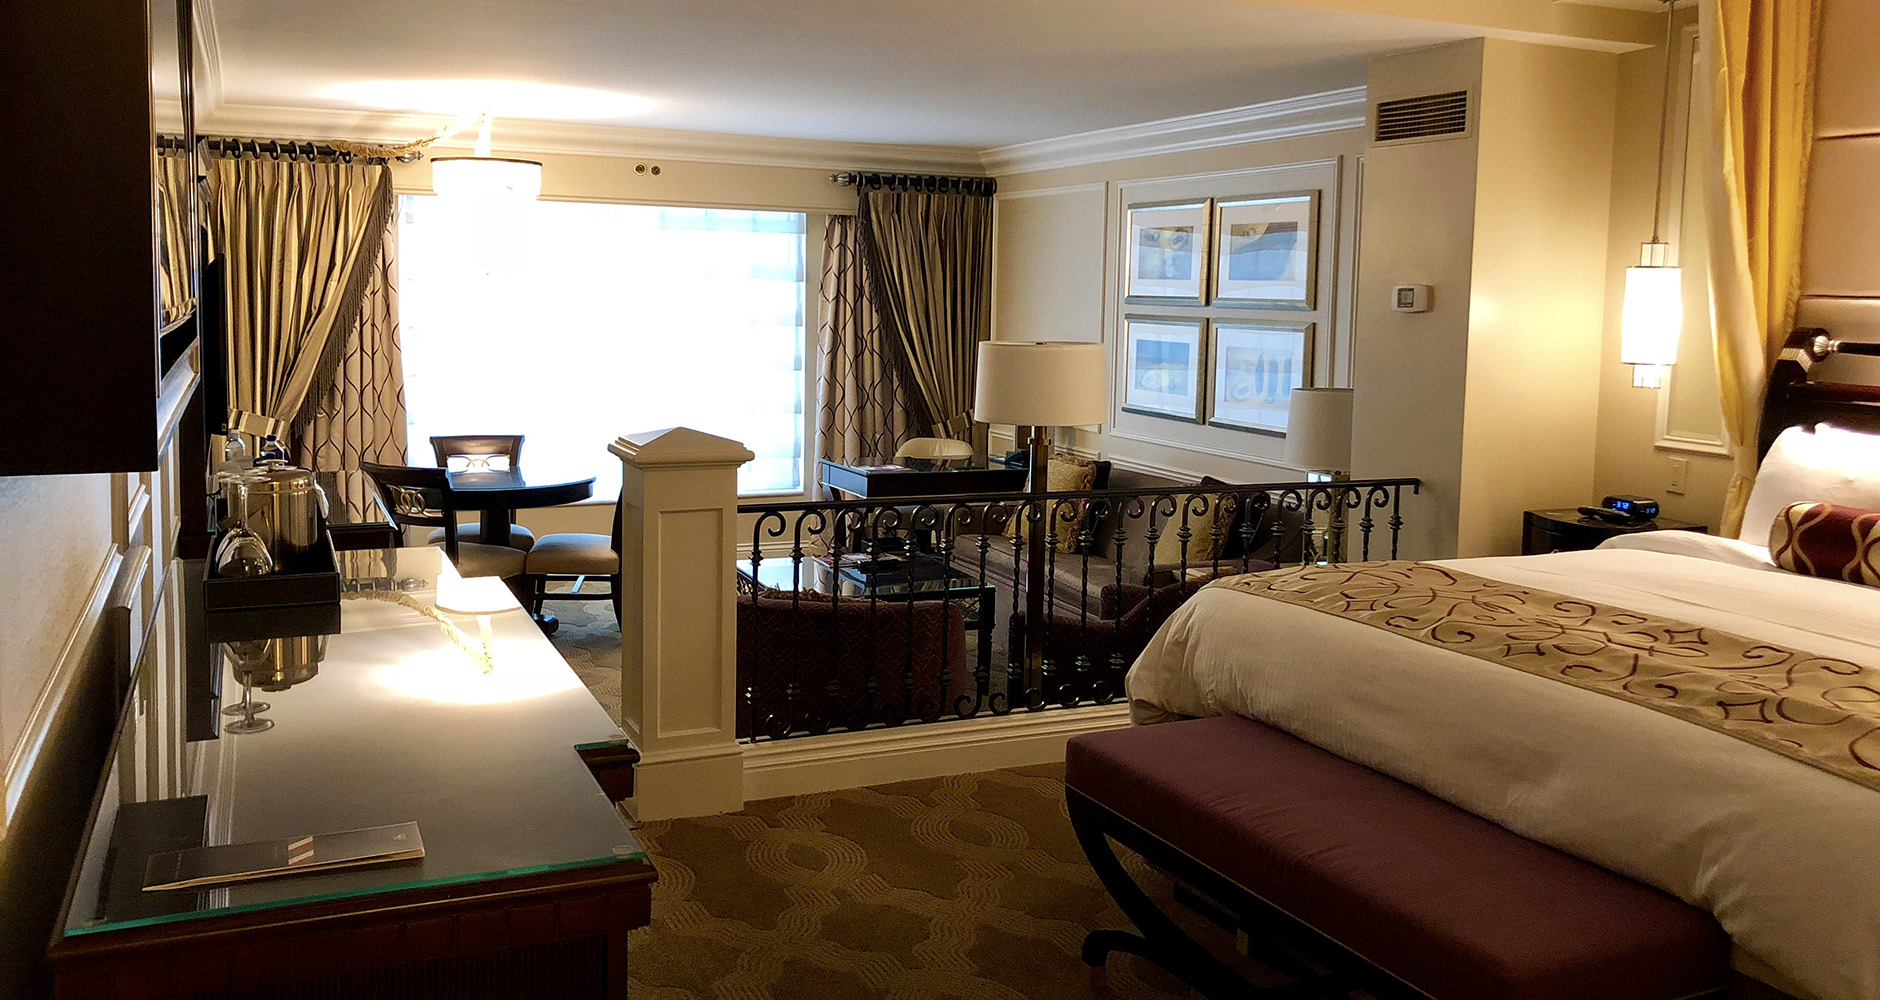 Our luxury king suite at The Venetian Hotel, Las Vegas